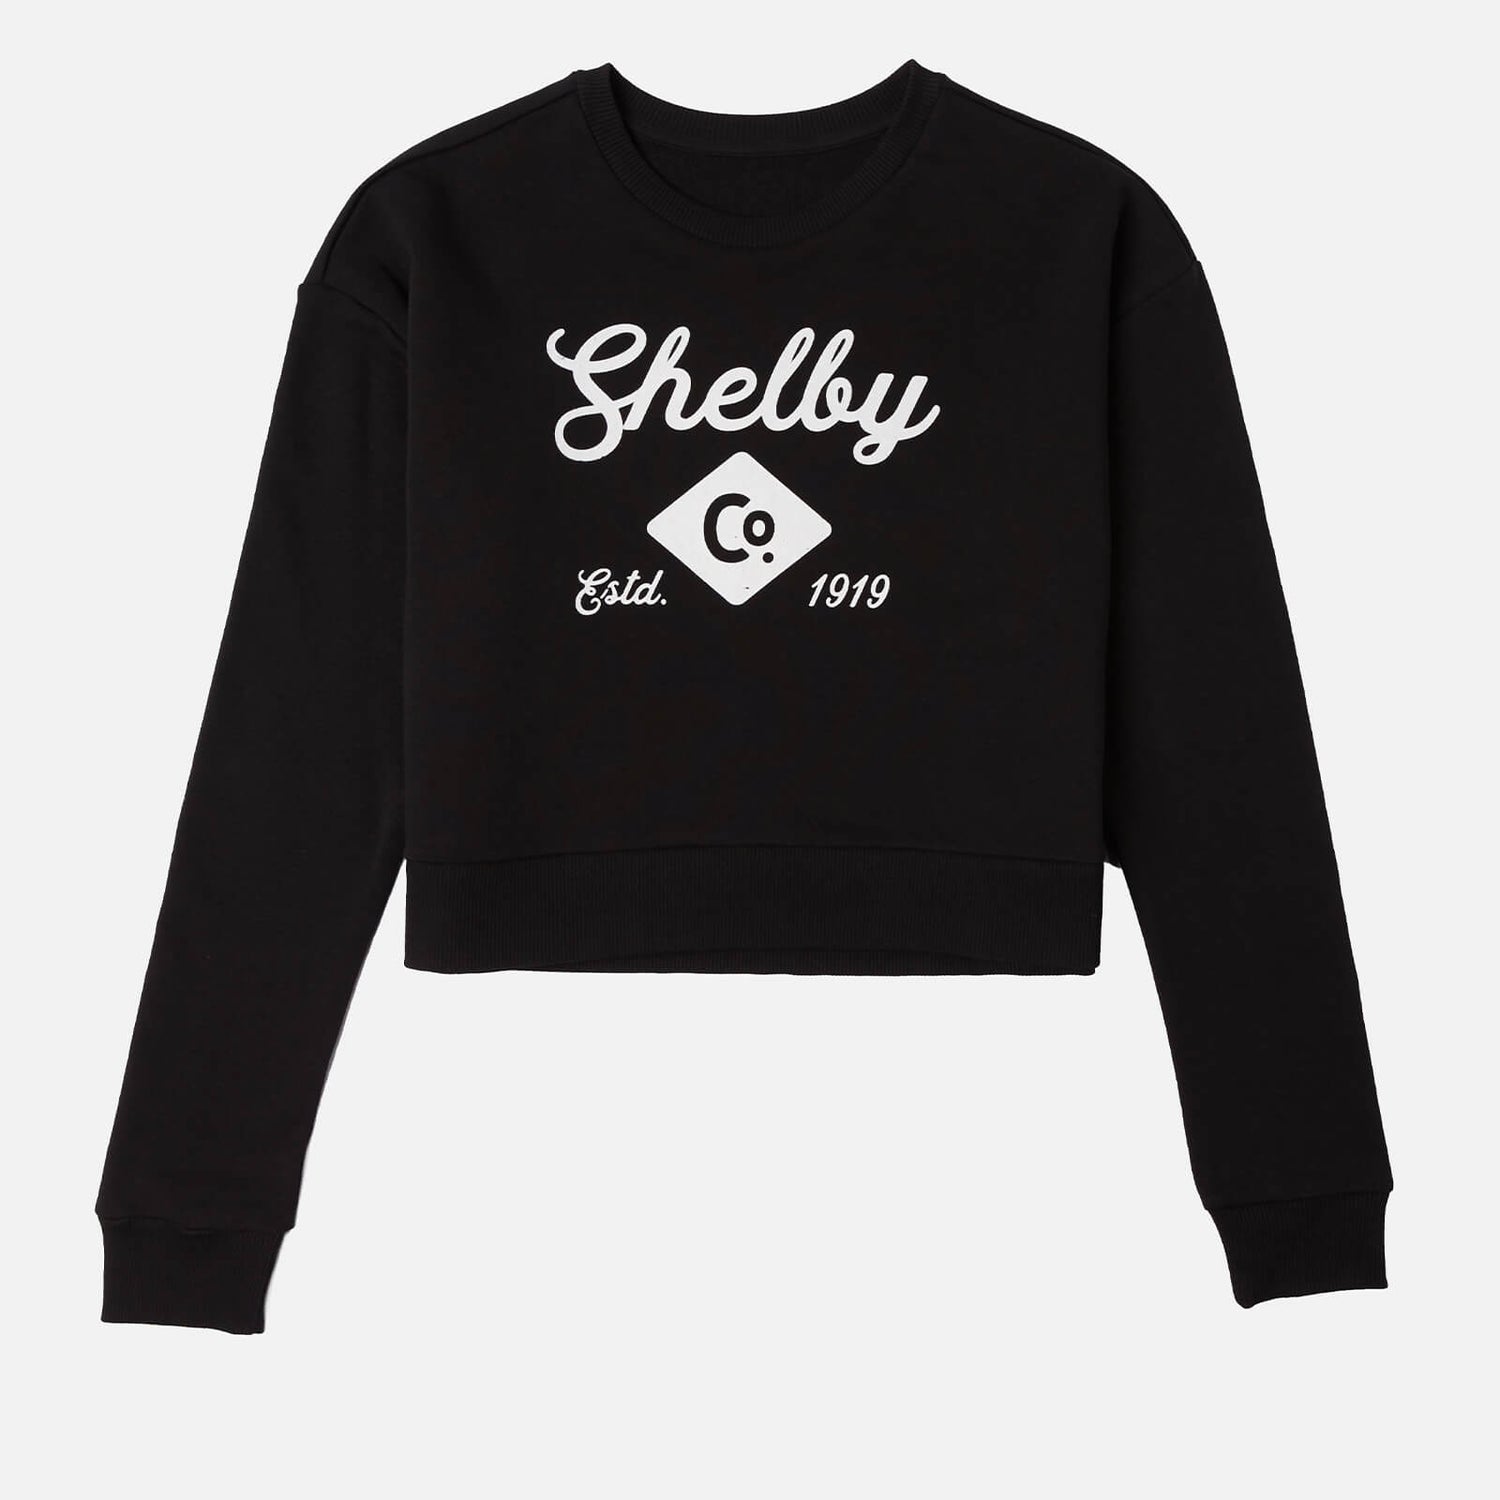 Peaky Blinders Shelby Co. Ltd Women's Cropped Sweatshirt - Black